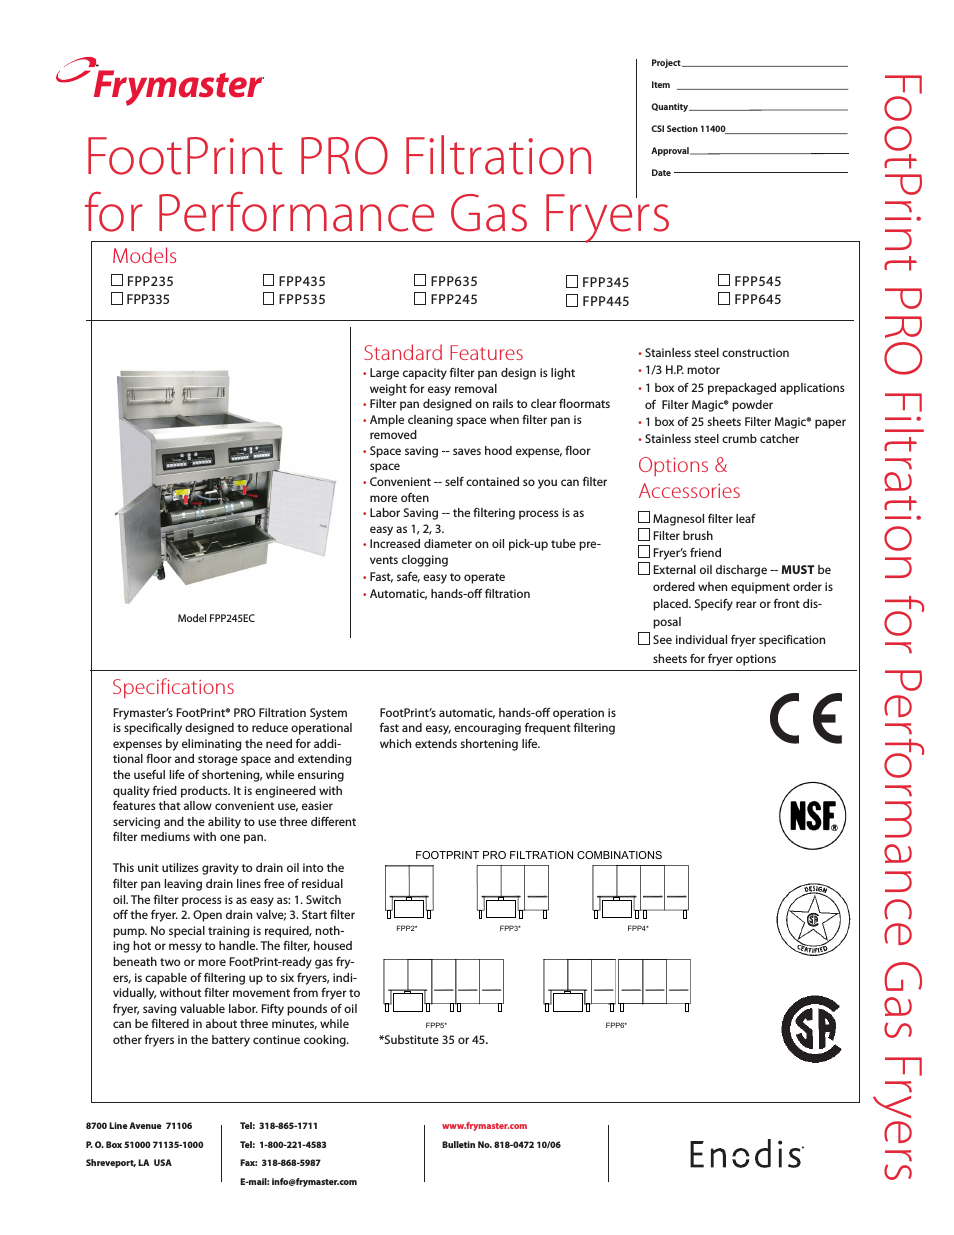 FootPrint PRO FPP645